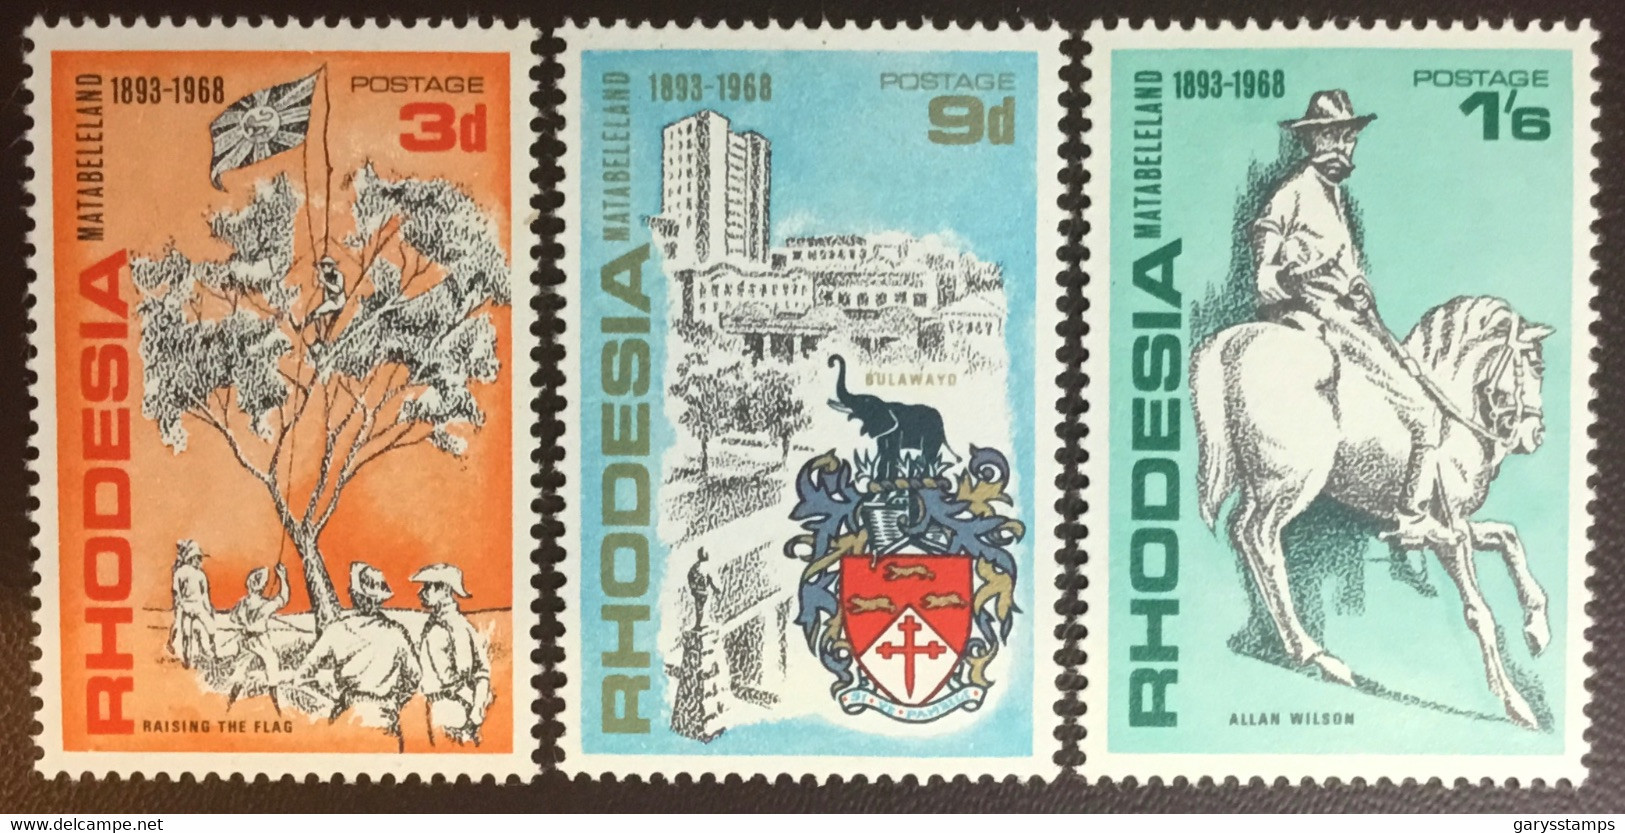 Rhodesia 1968 Matabeleland Anniversary MNH - Rhodesia (1964-1980)